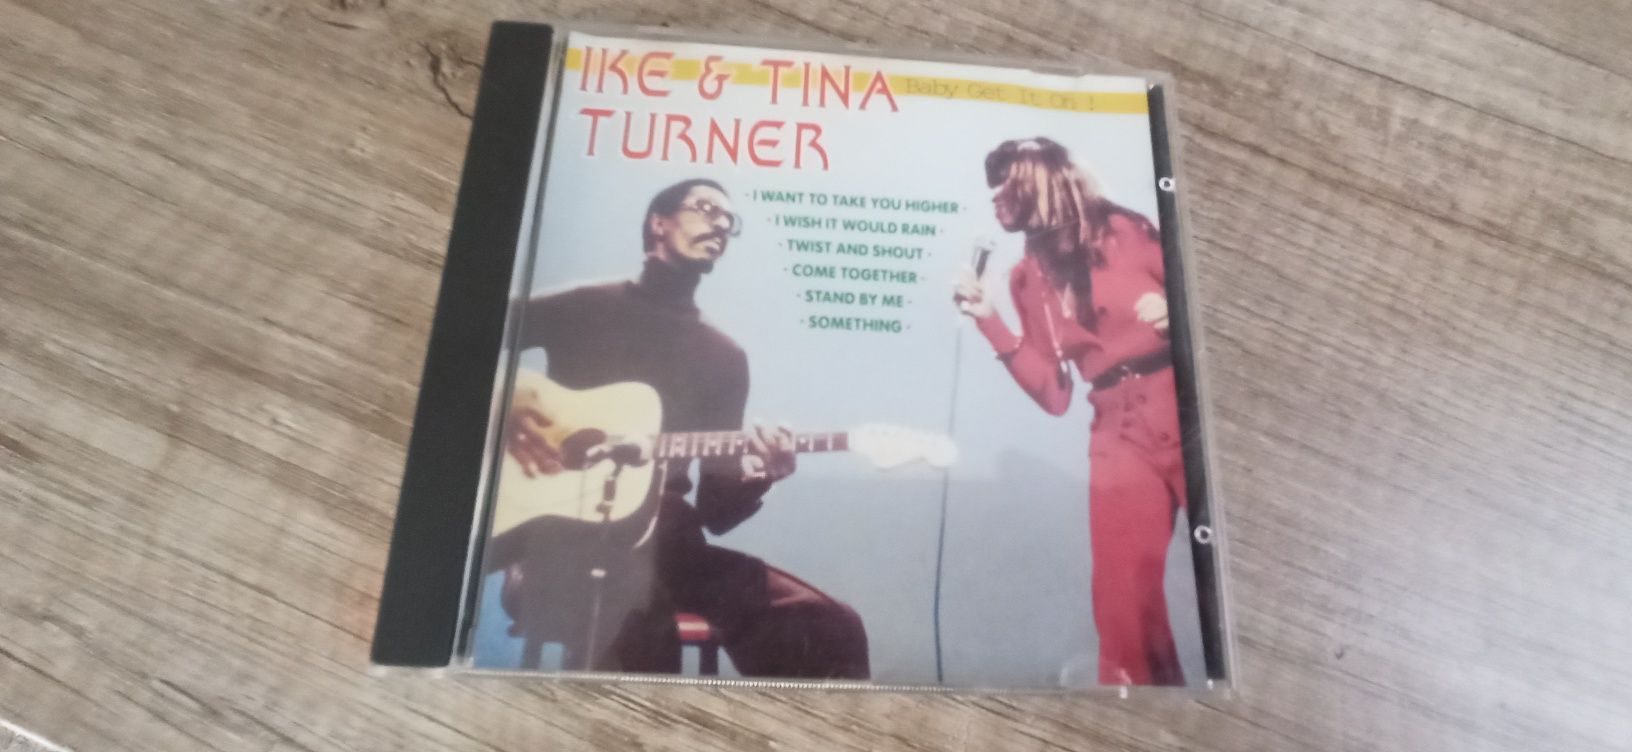 Ike Tina Turner Baby Get IT ON!